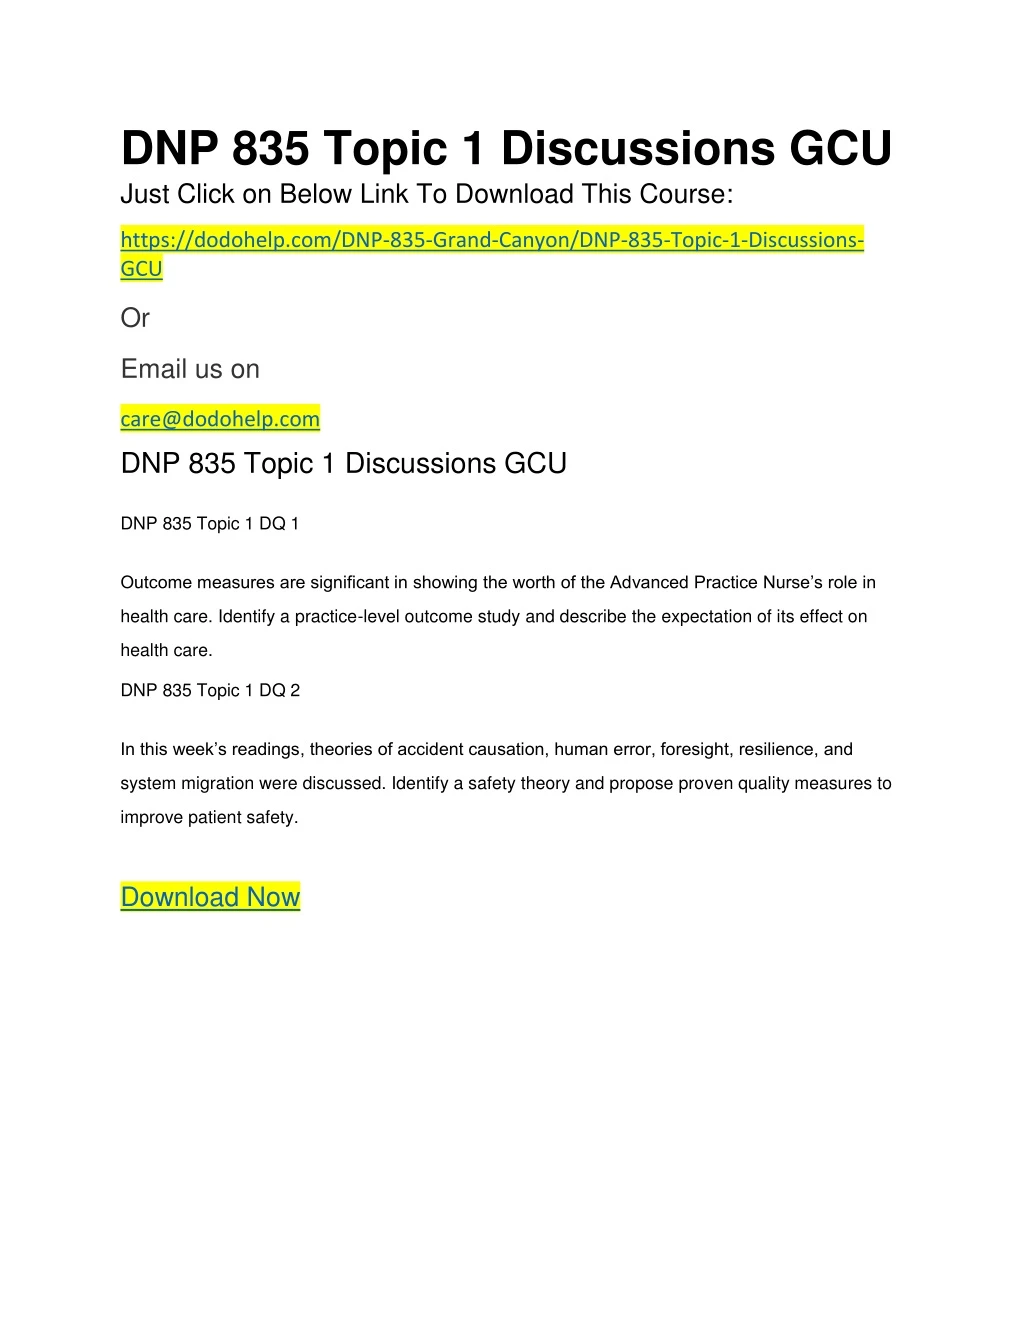 dnp 835 topic 1 discussions gcu just click